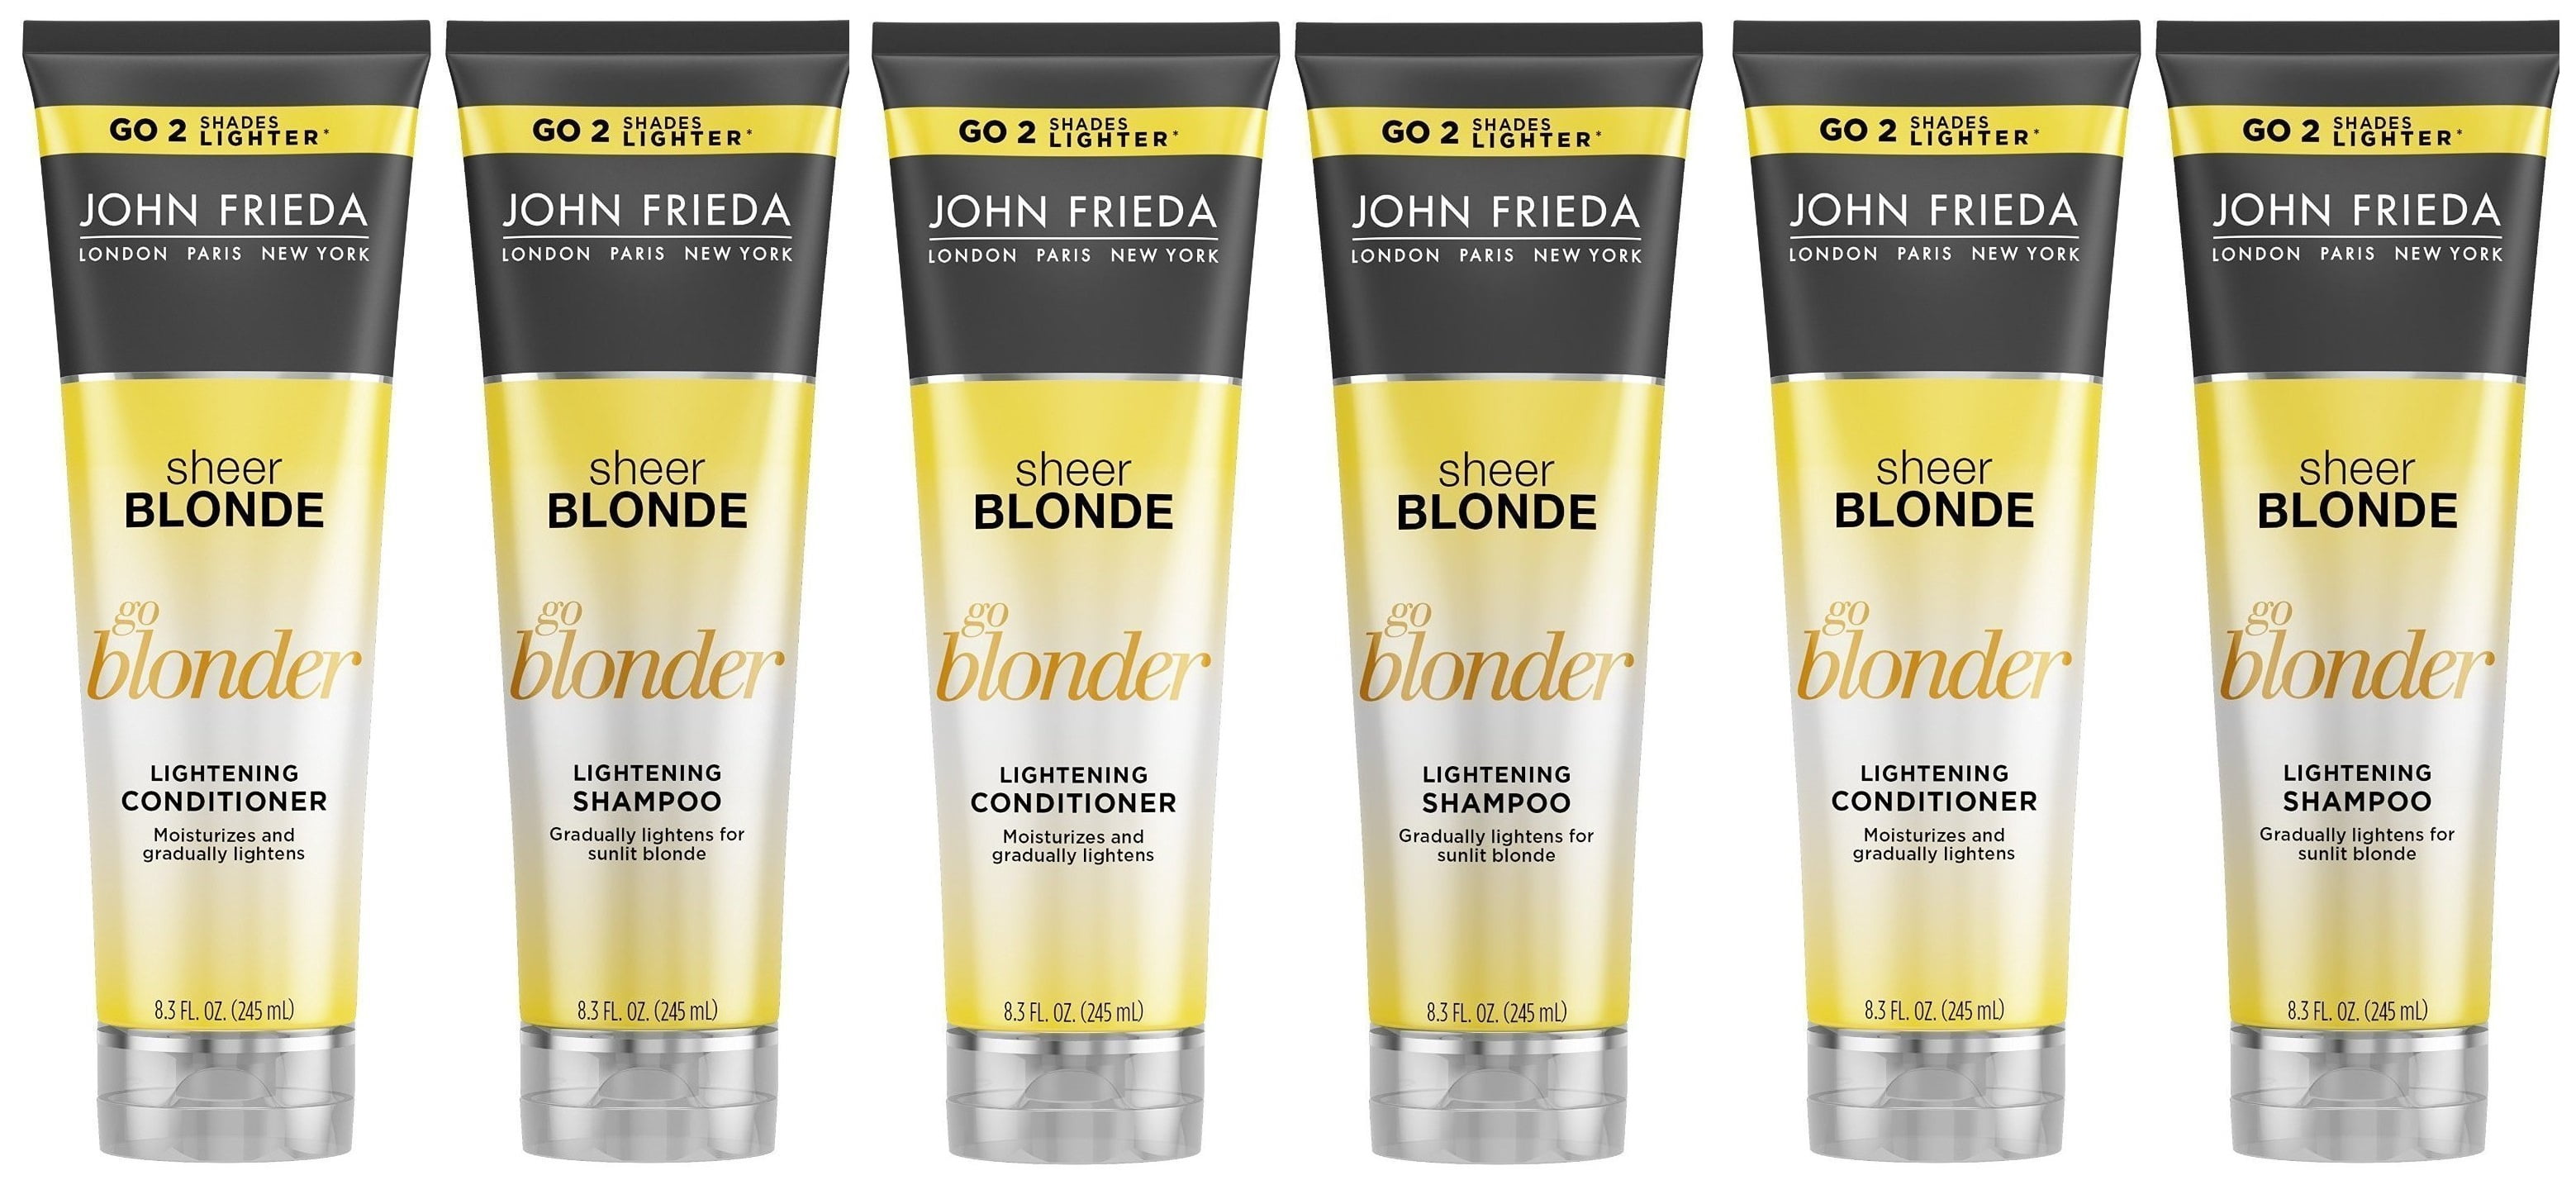 2. John Frieda Sheer Blonde Go Blonder Lightening Shampoo - wide 9